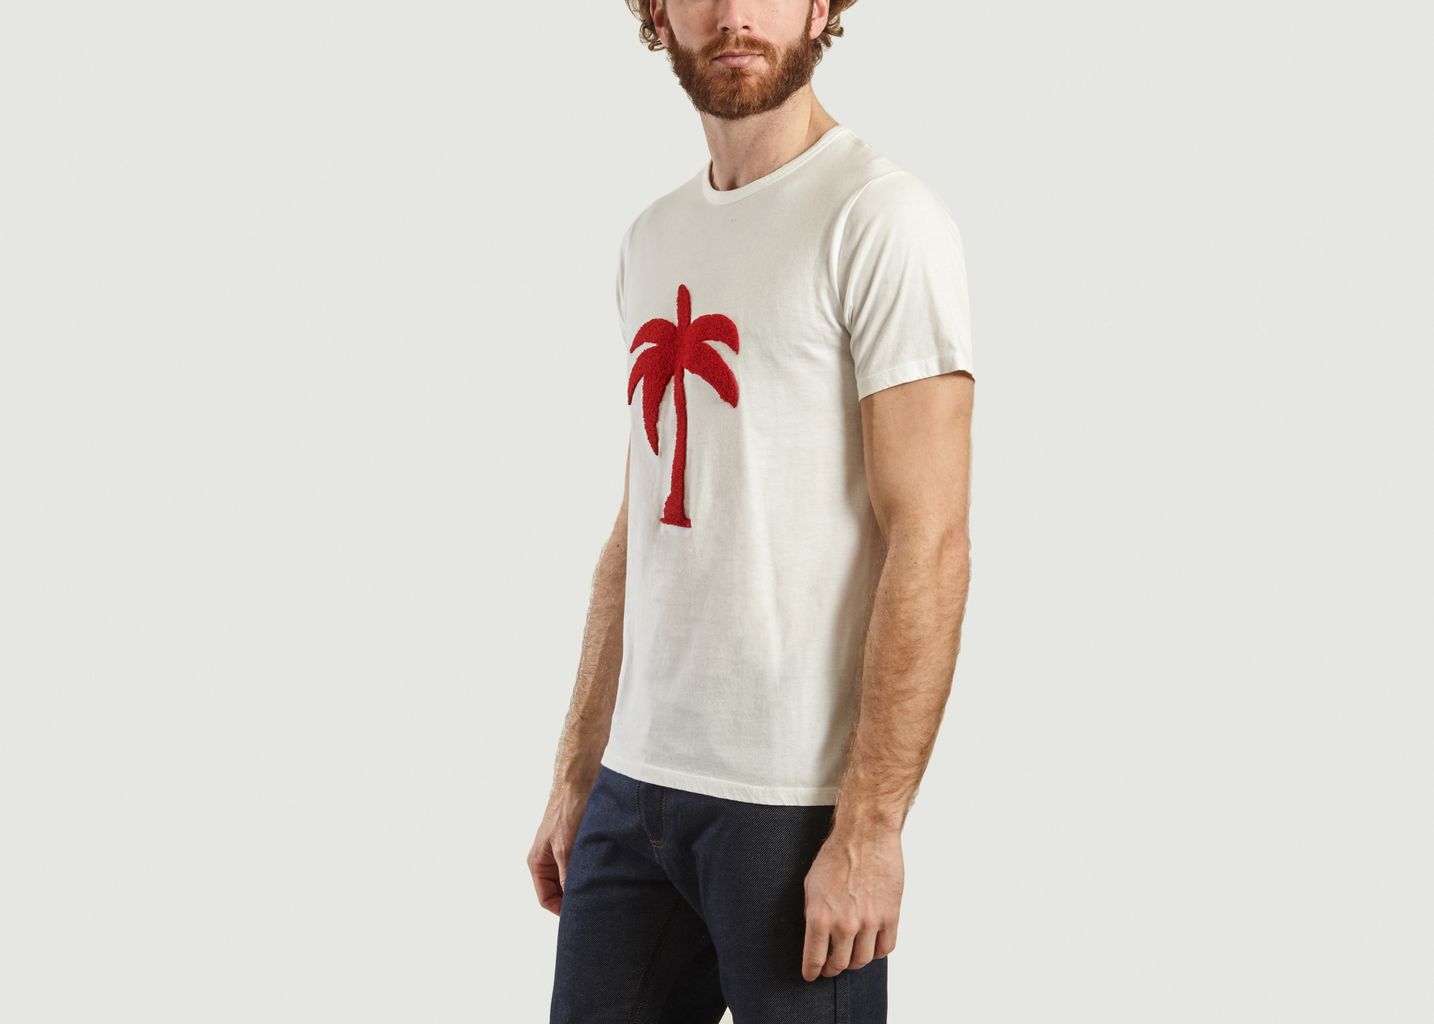 Yann Palm Spring embroidered t-shirt - Les Garçons Faciles